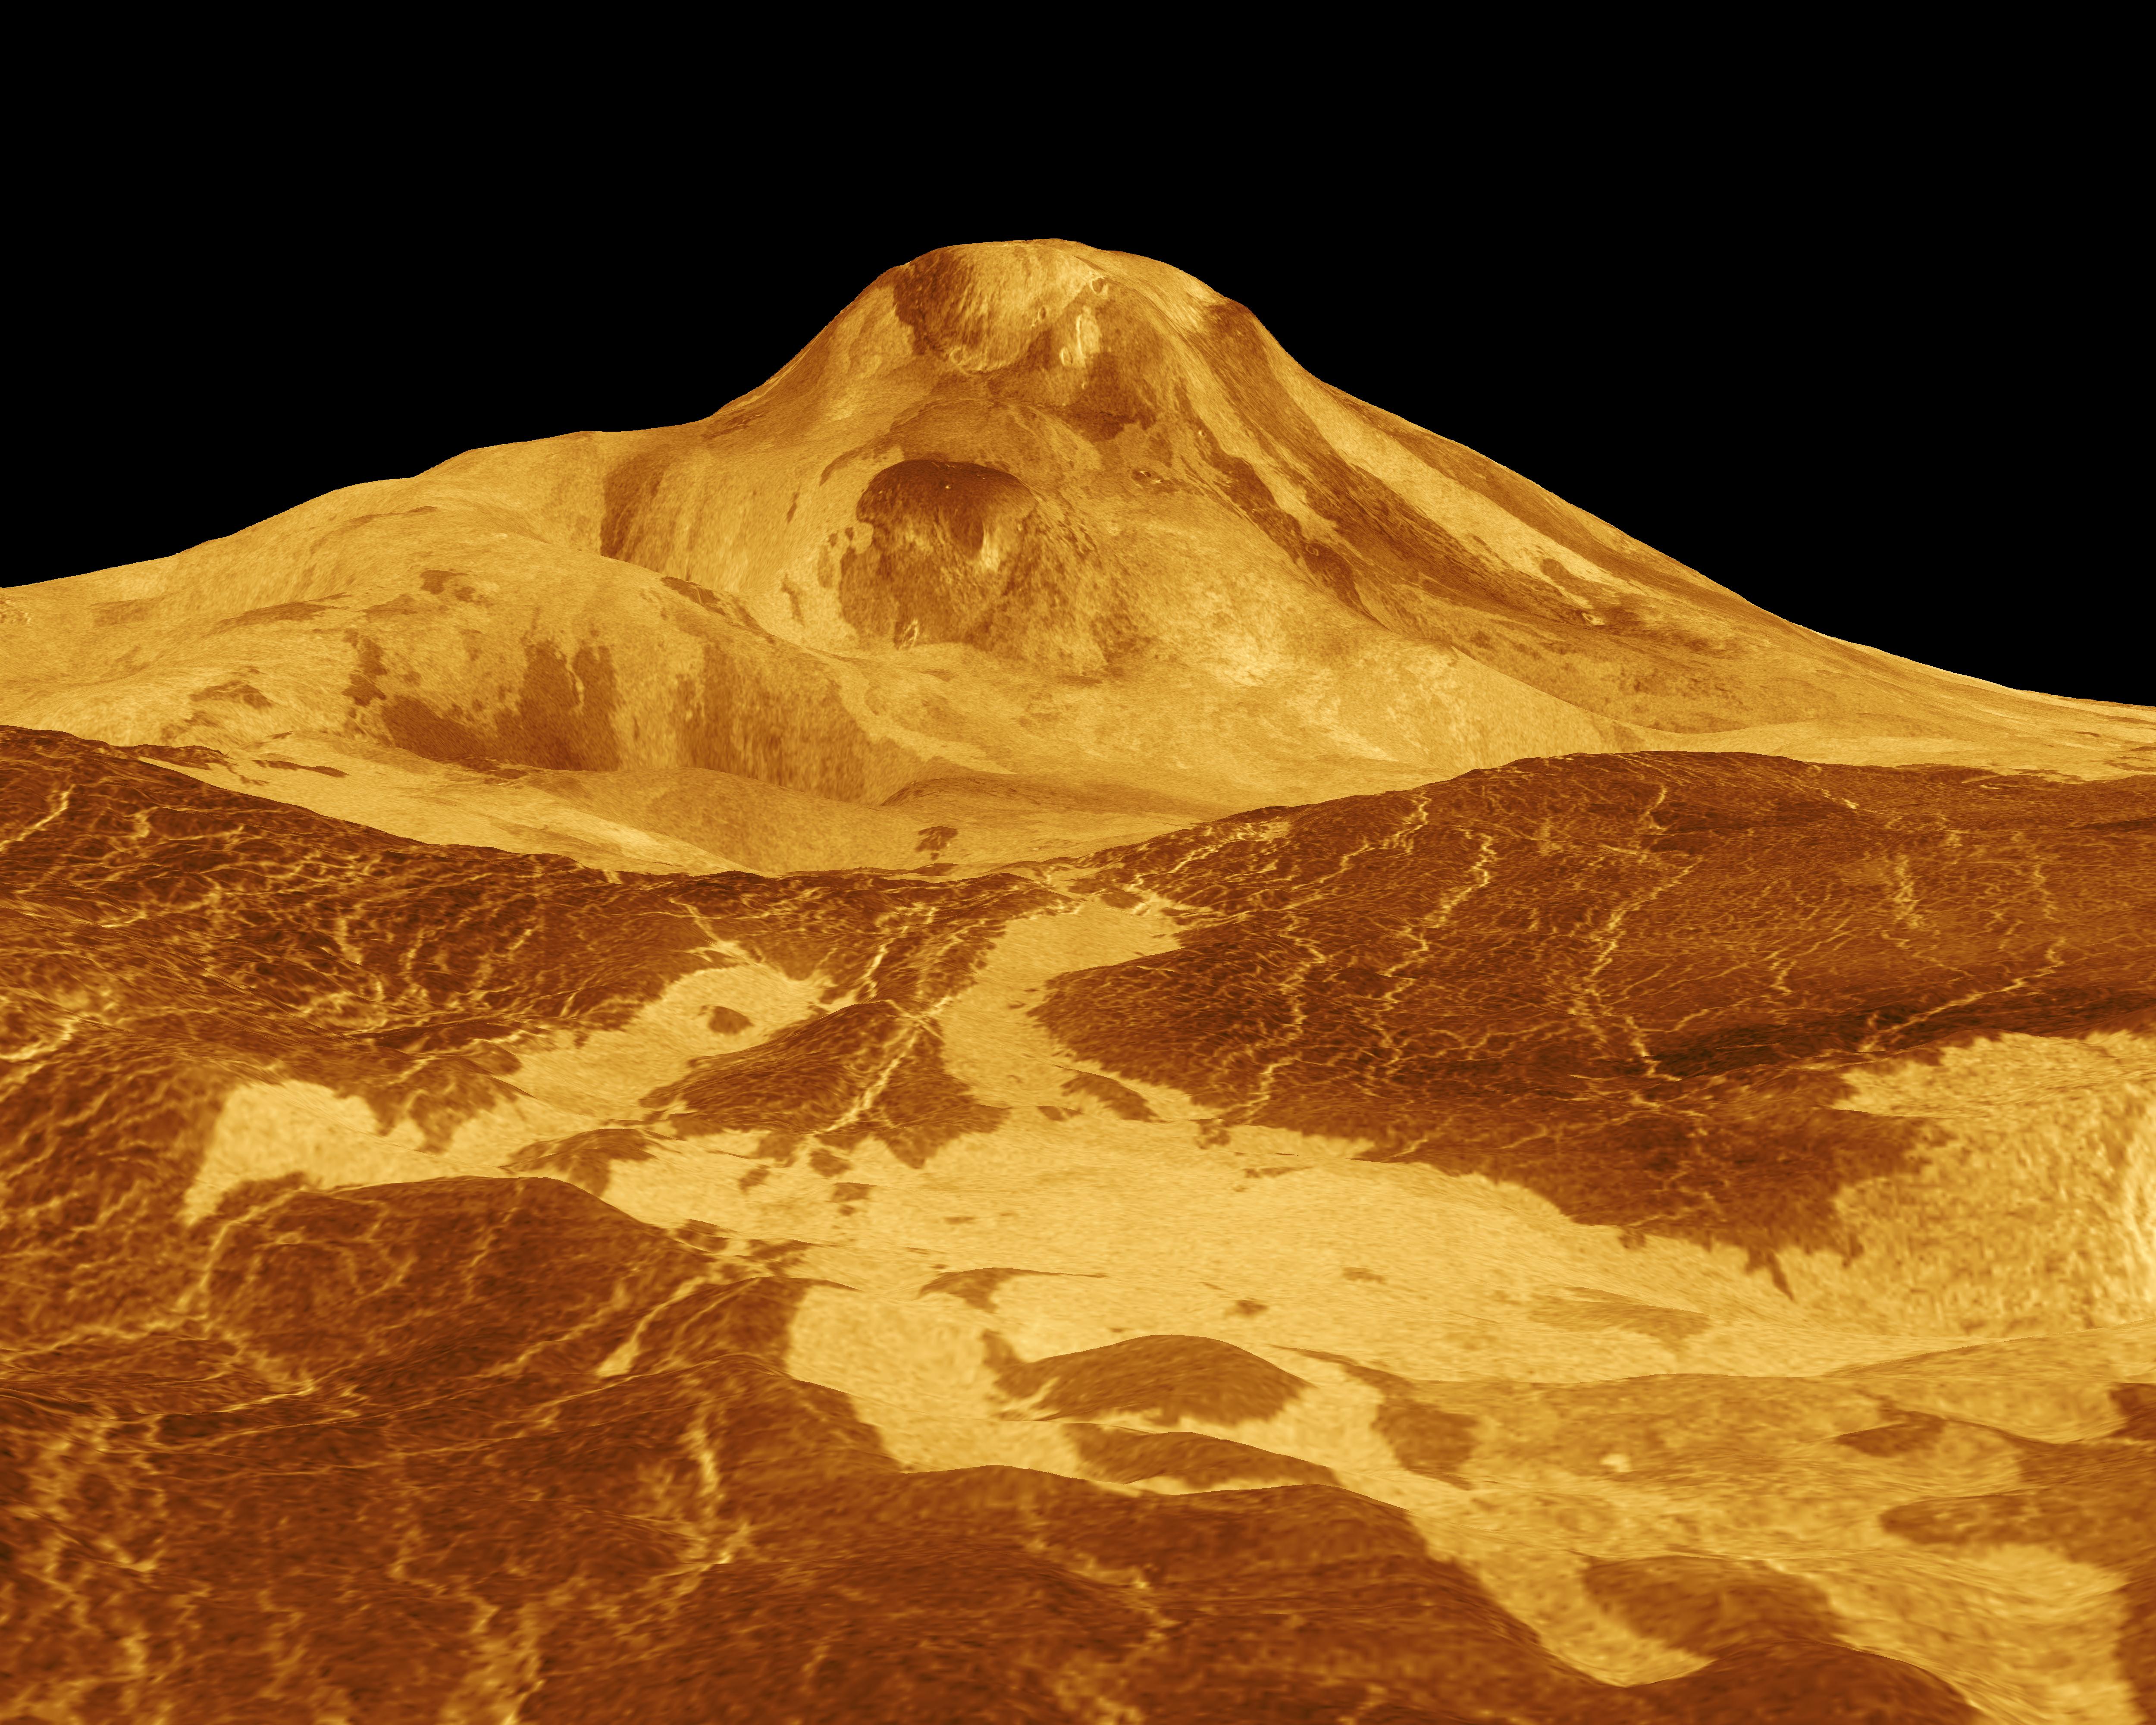 images of planet venus surface download